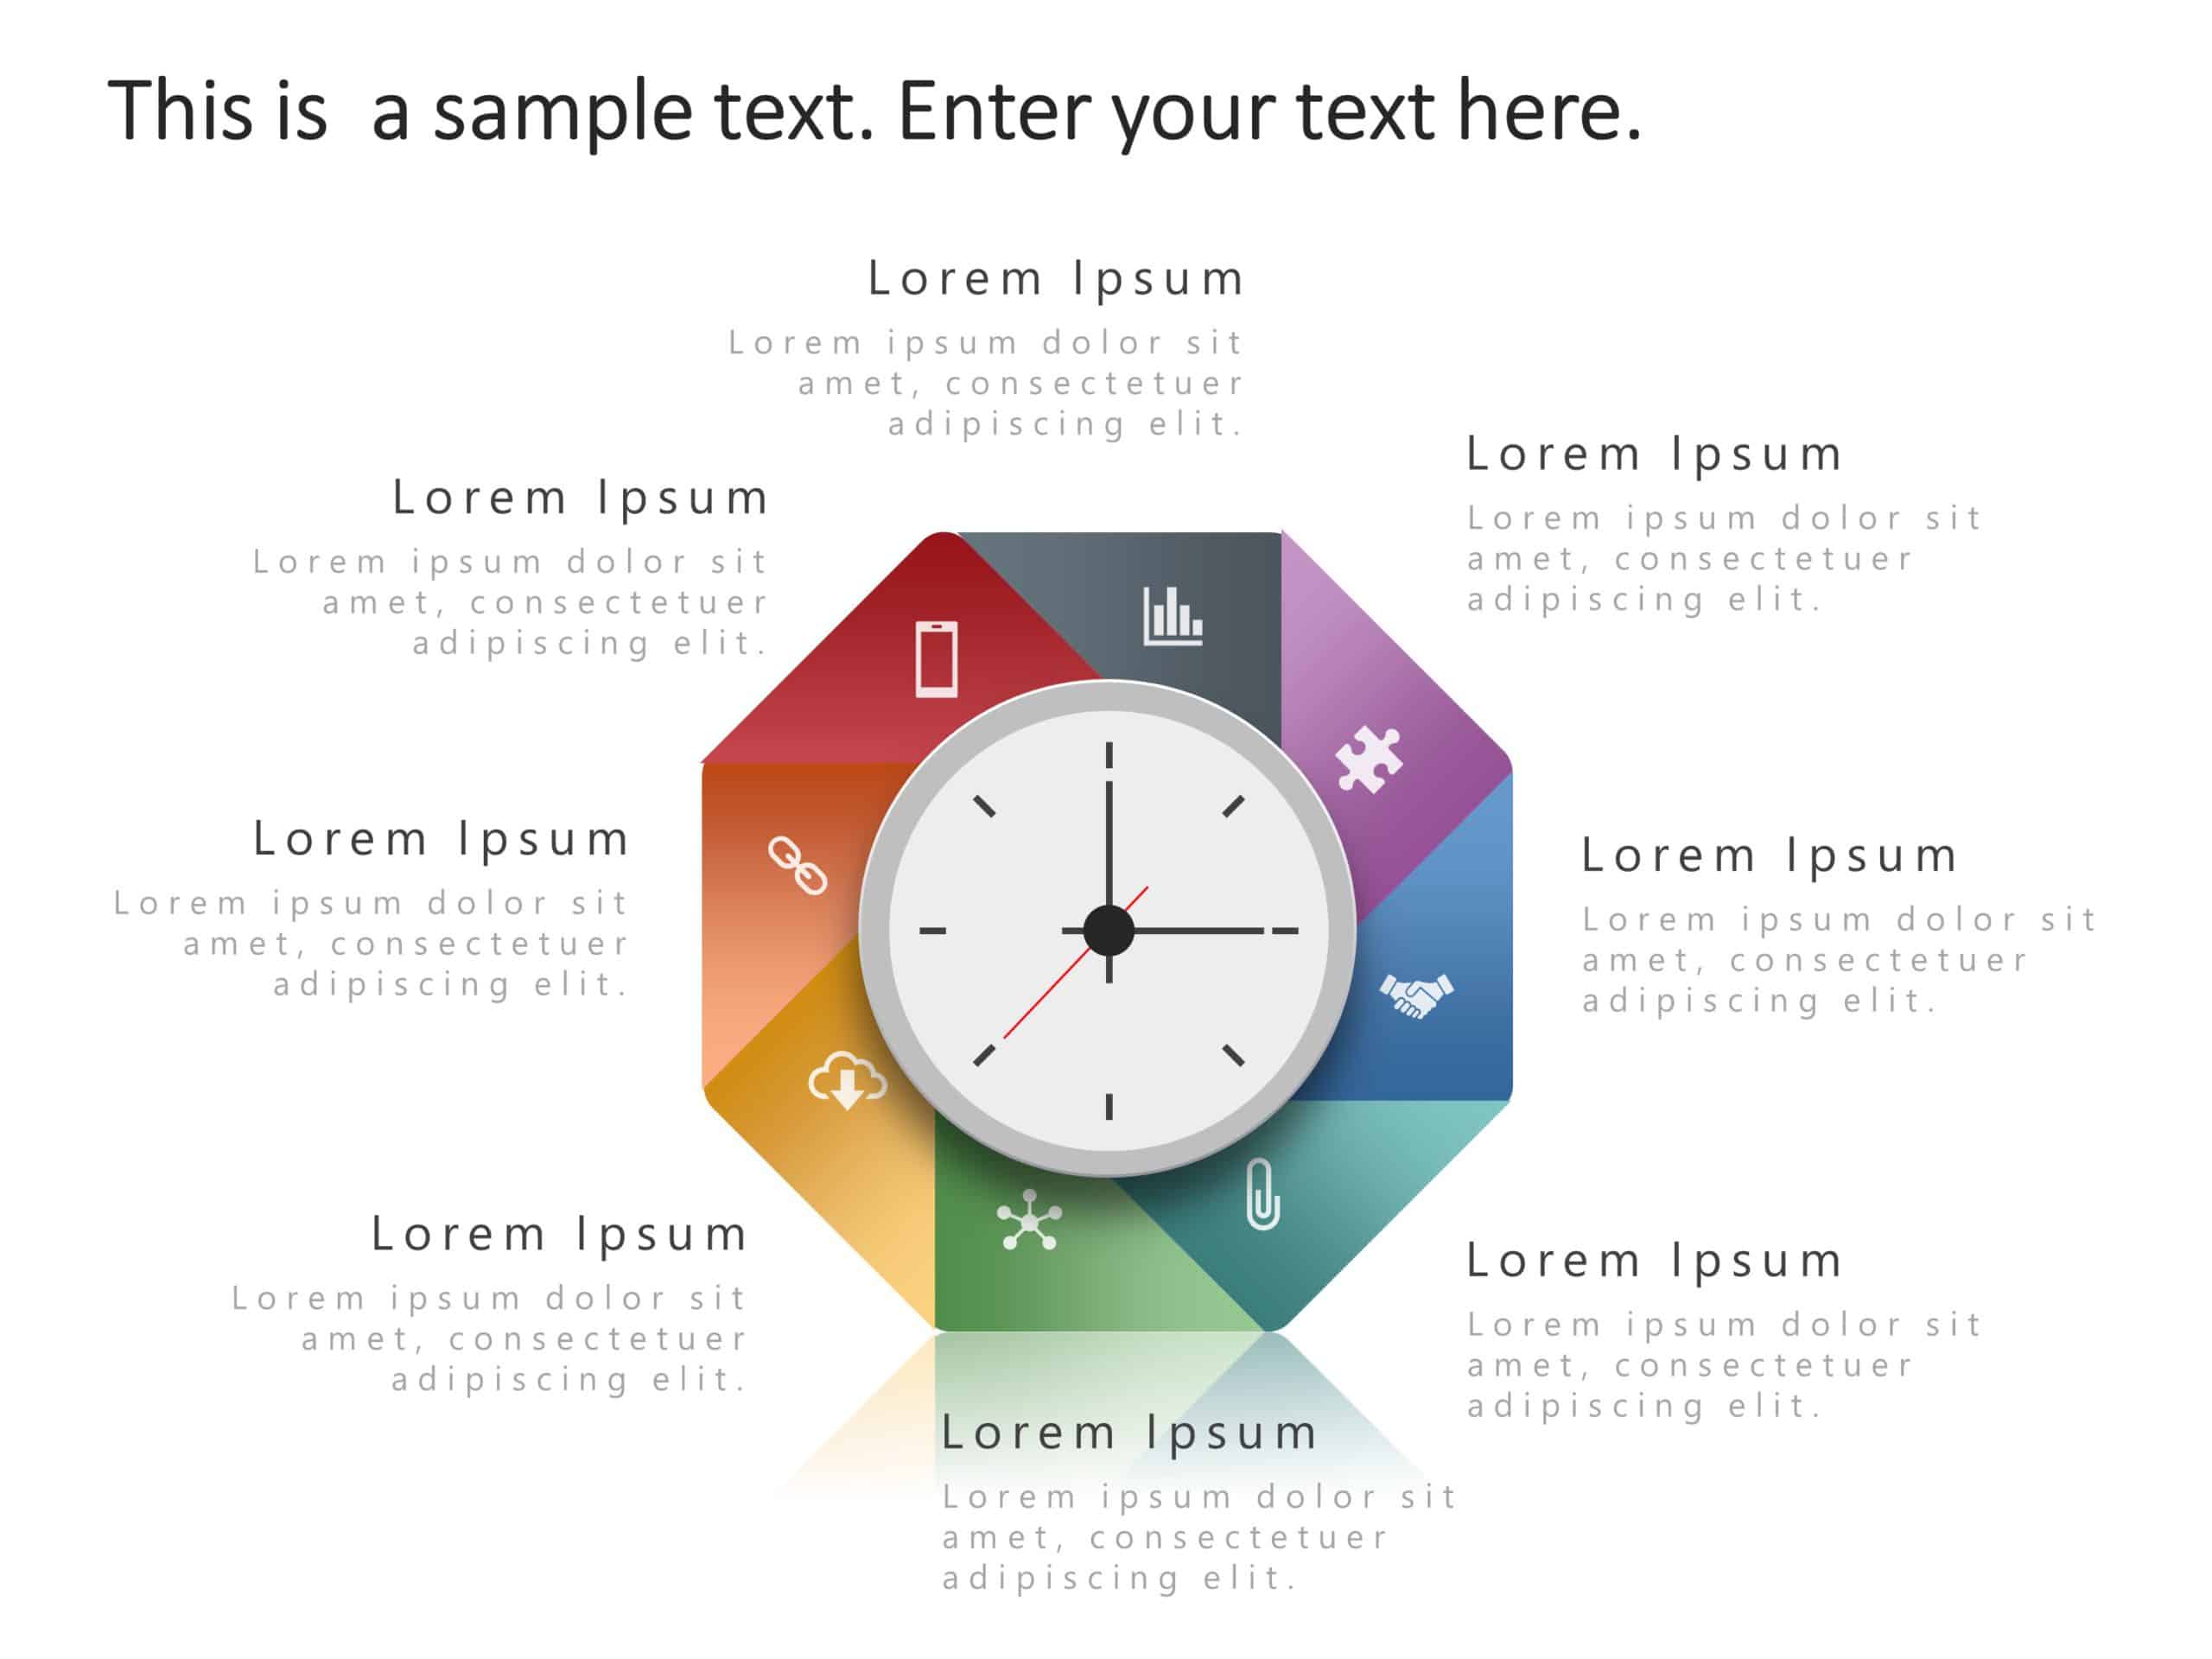 Octagon 1 PowerPoint Template & Google Slides Theme